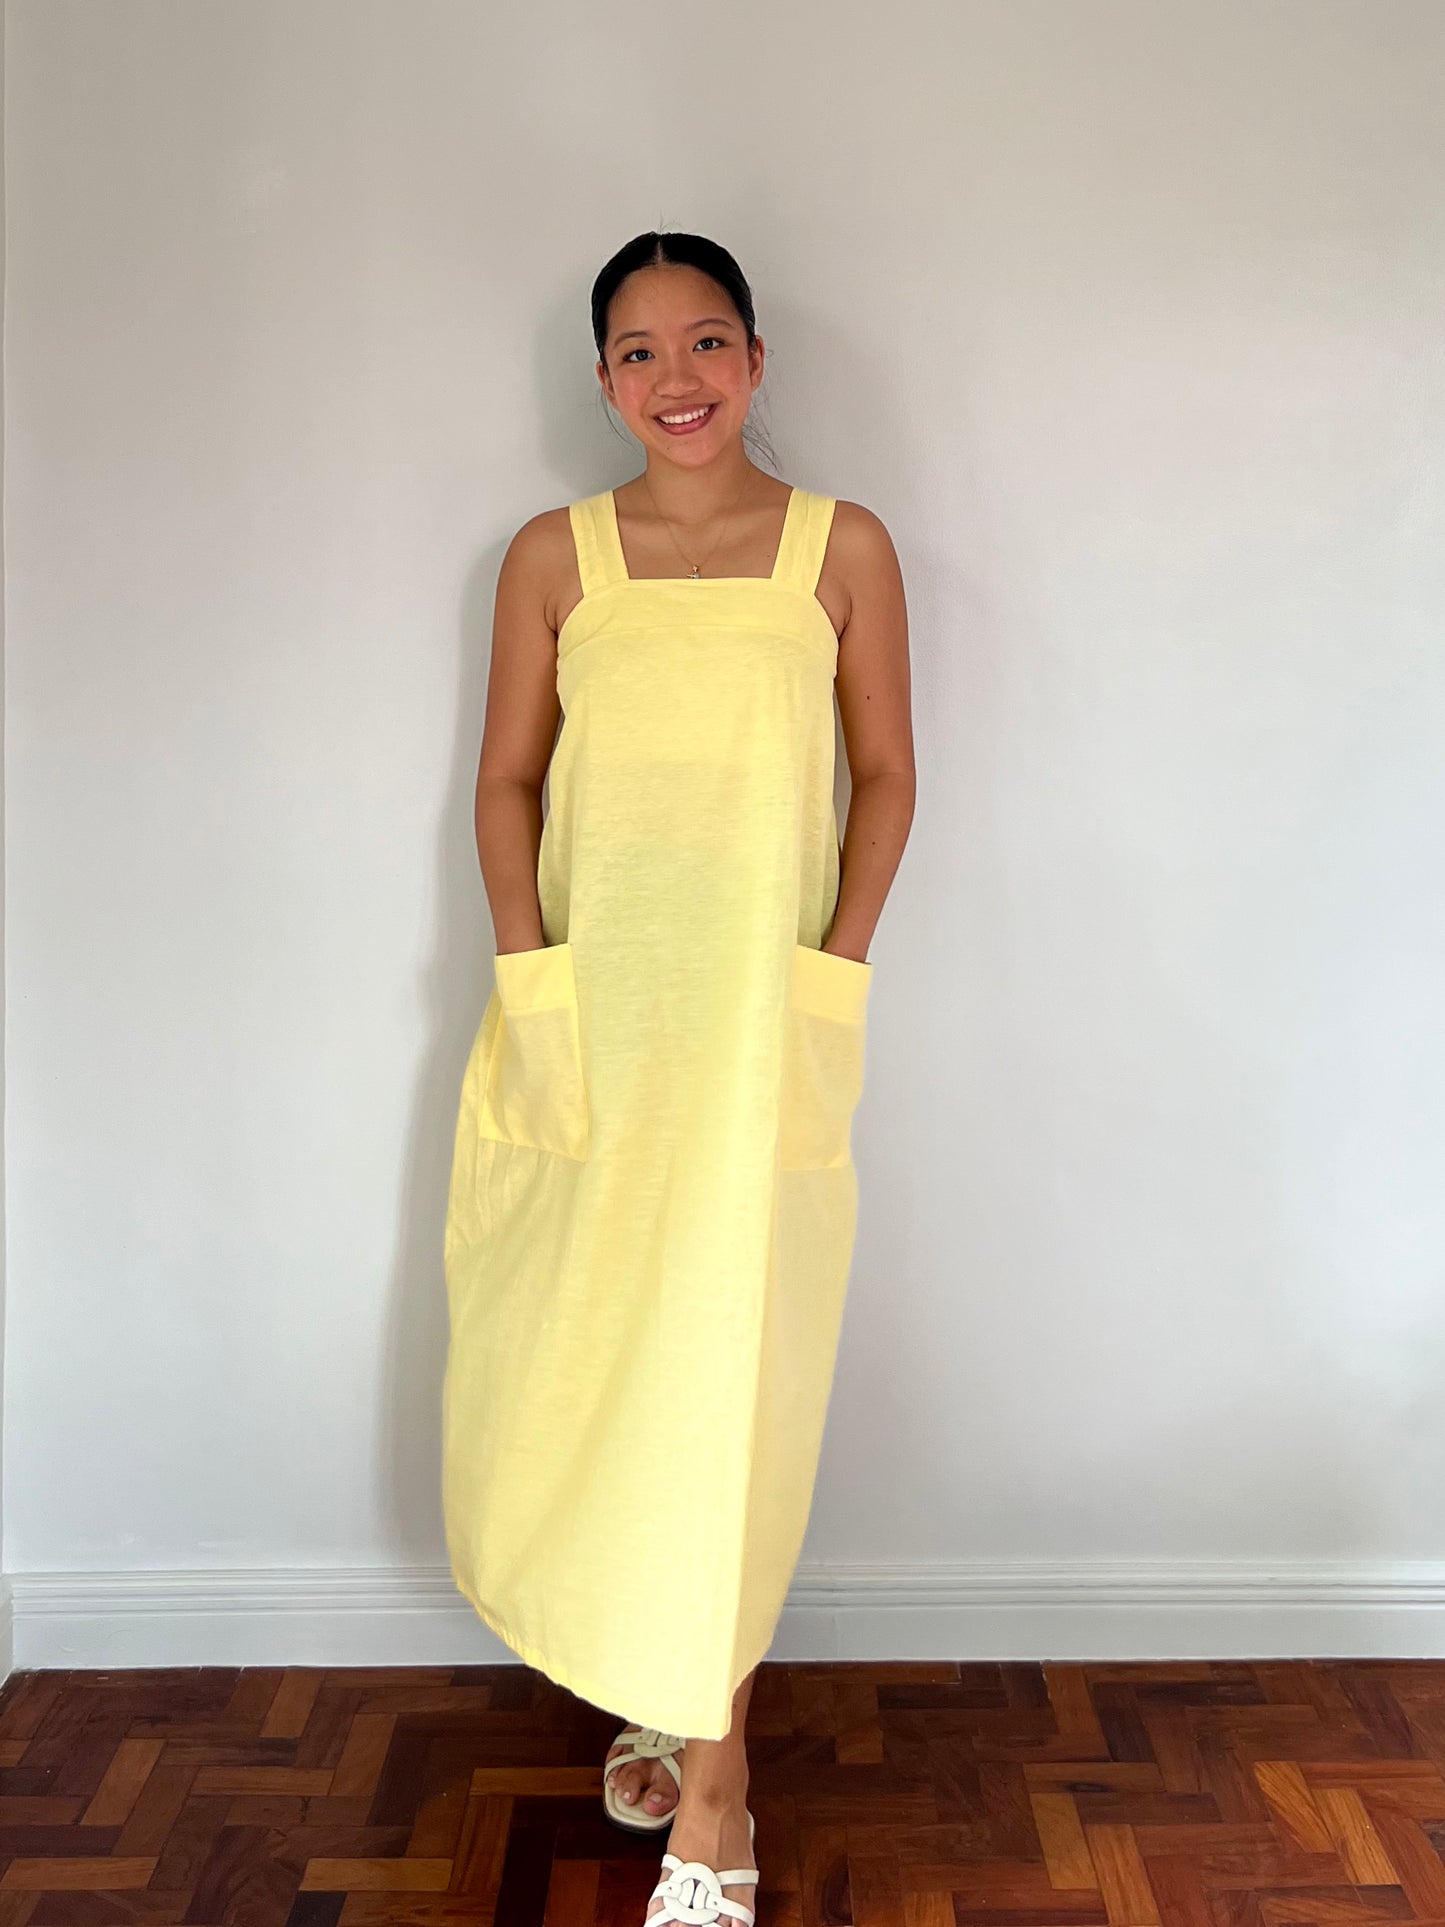 Galatia Dress in Yellow (Short Version)